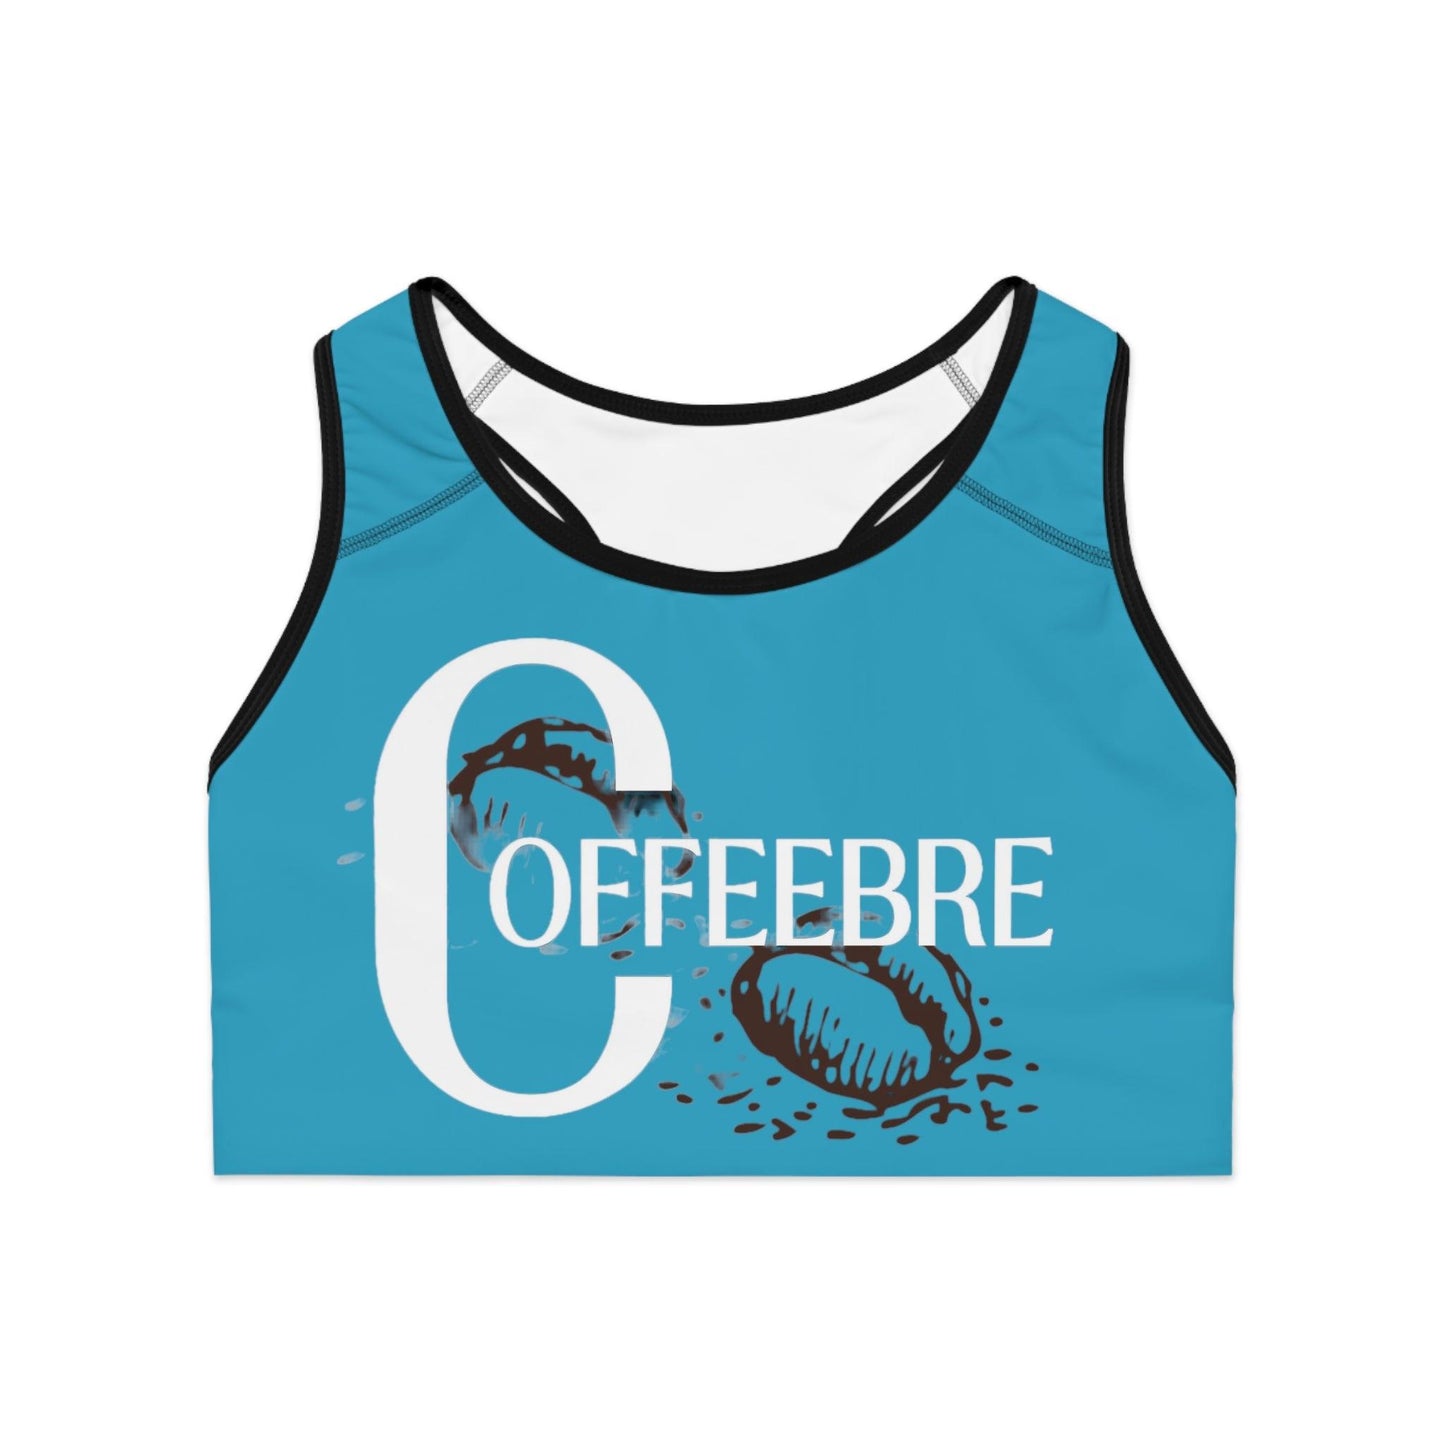 Turquoise Sports Bra - COFFEEBRE